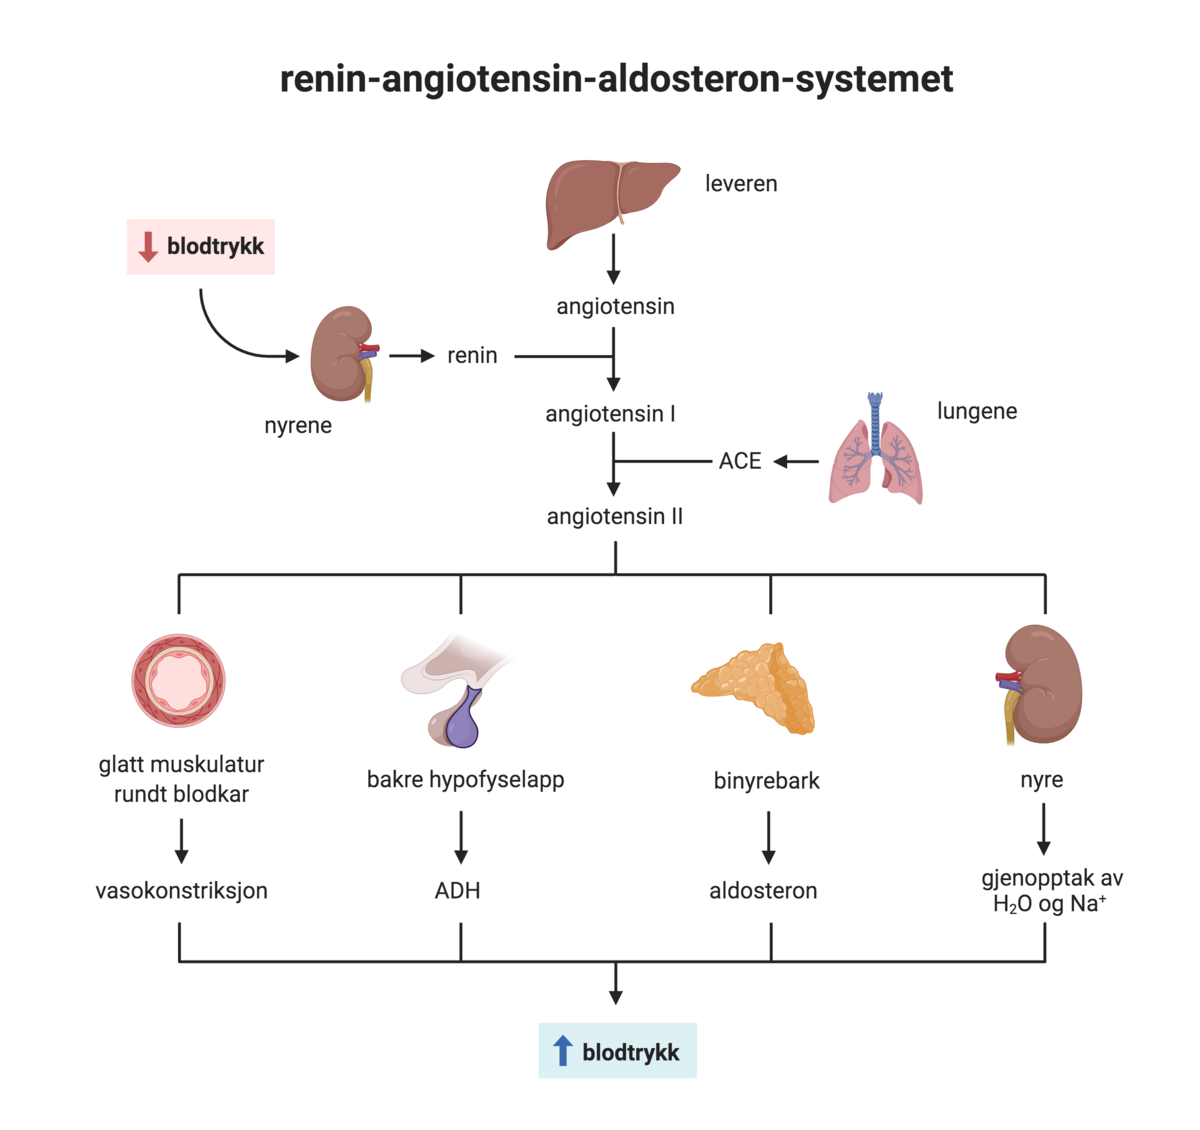 Renin-angiotensin-aldosteron-systemet